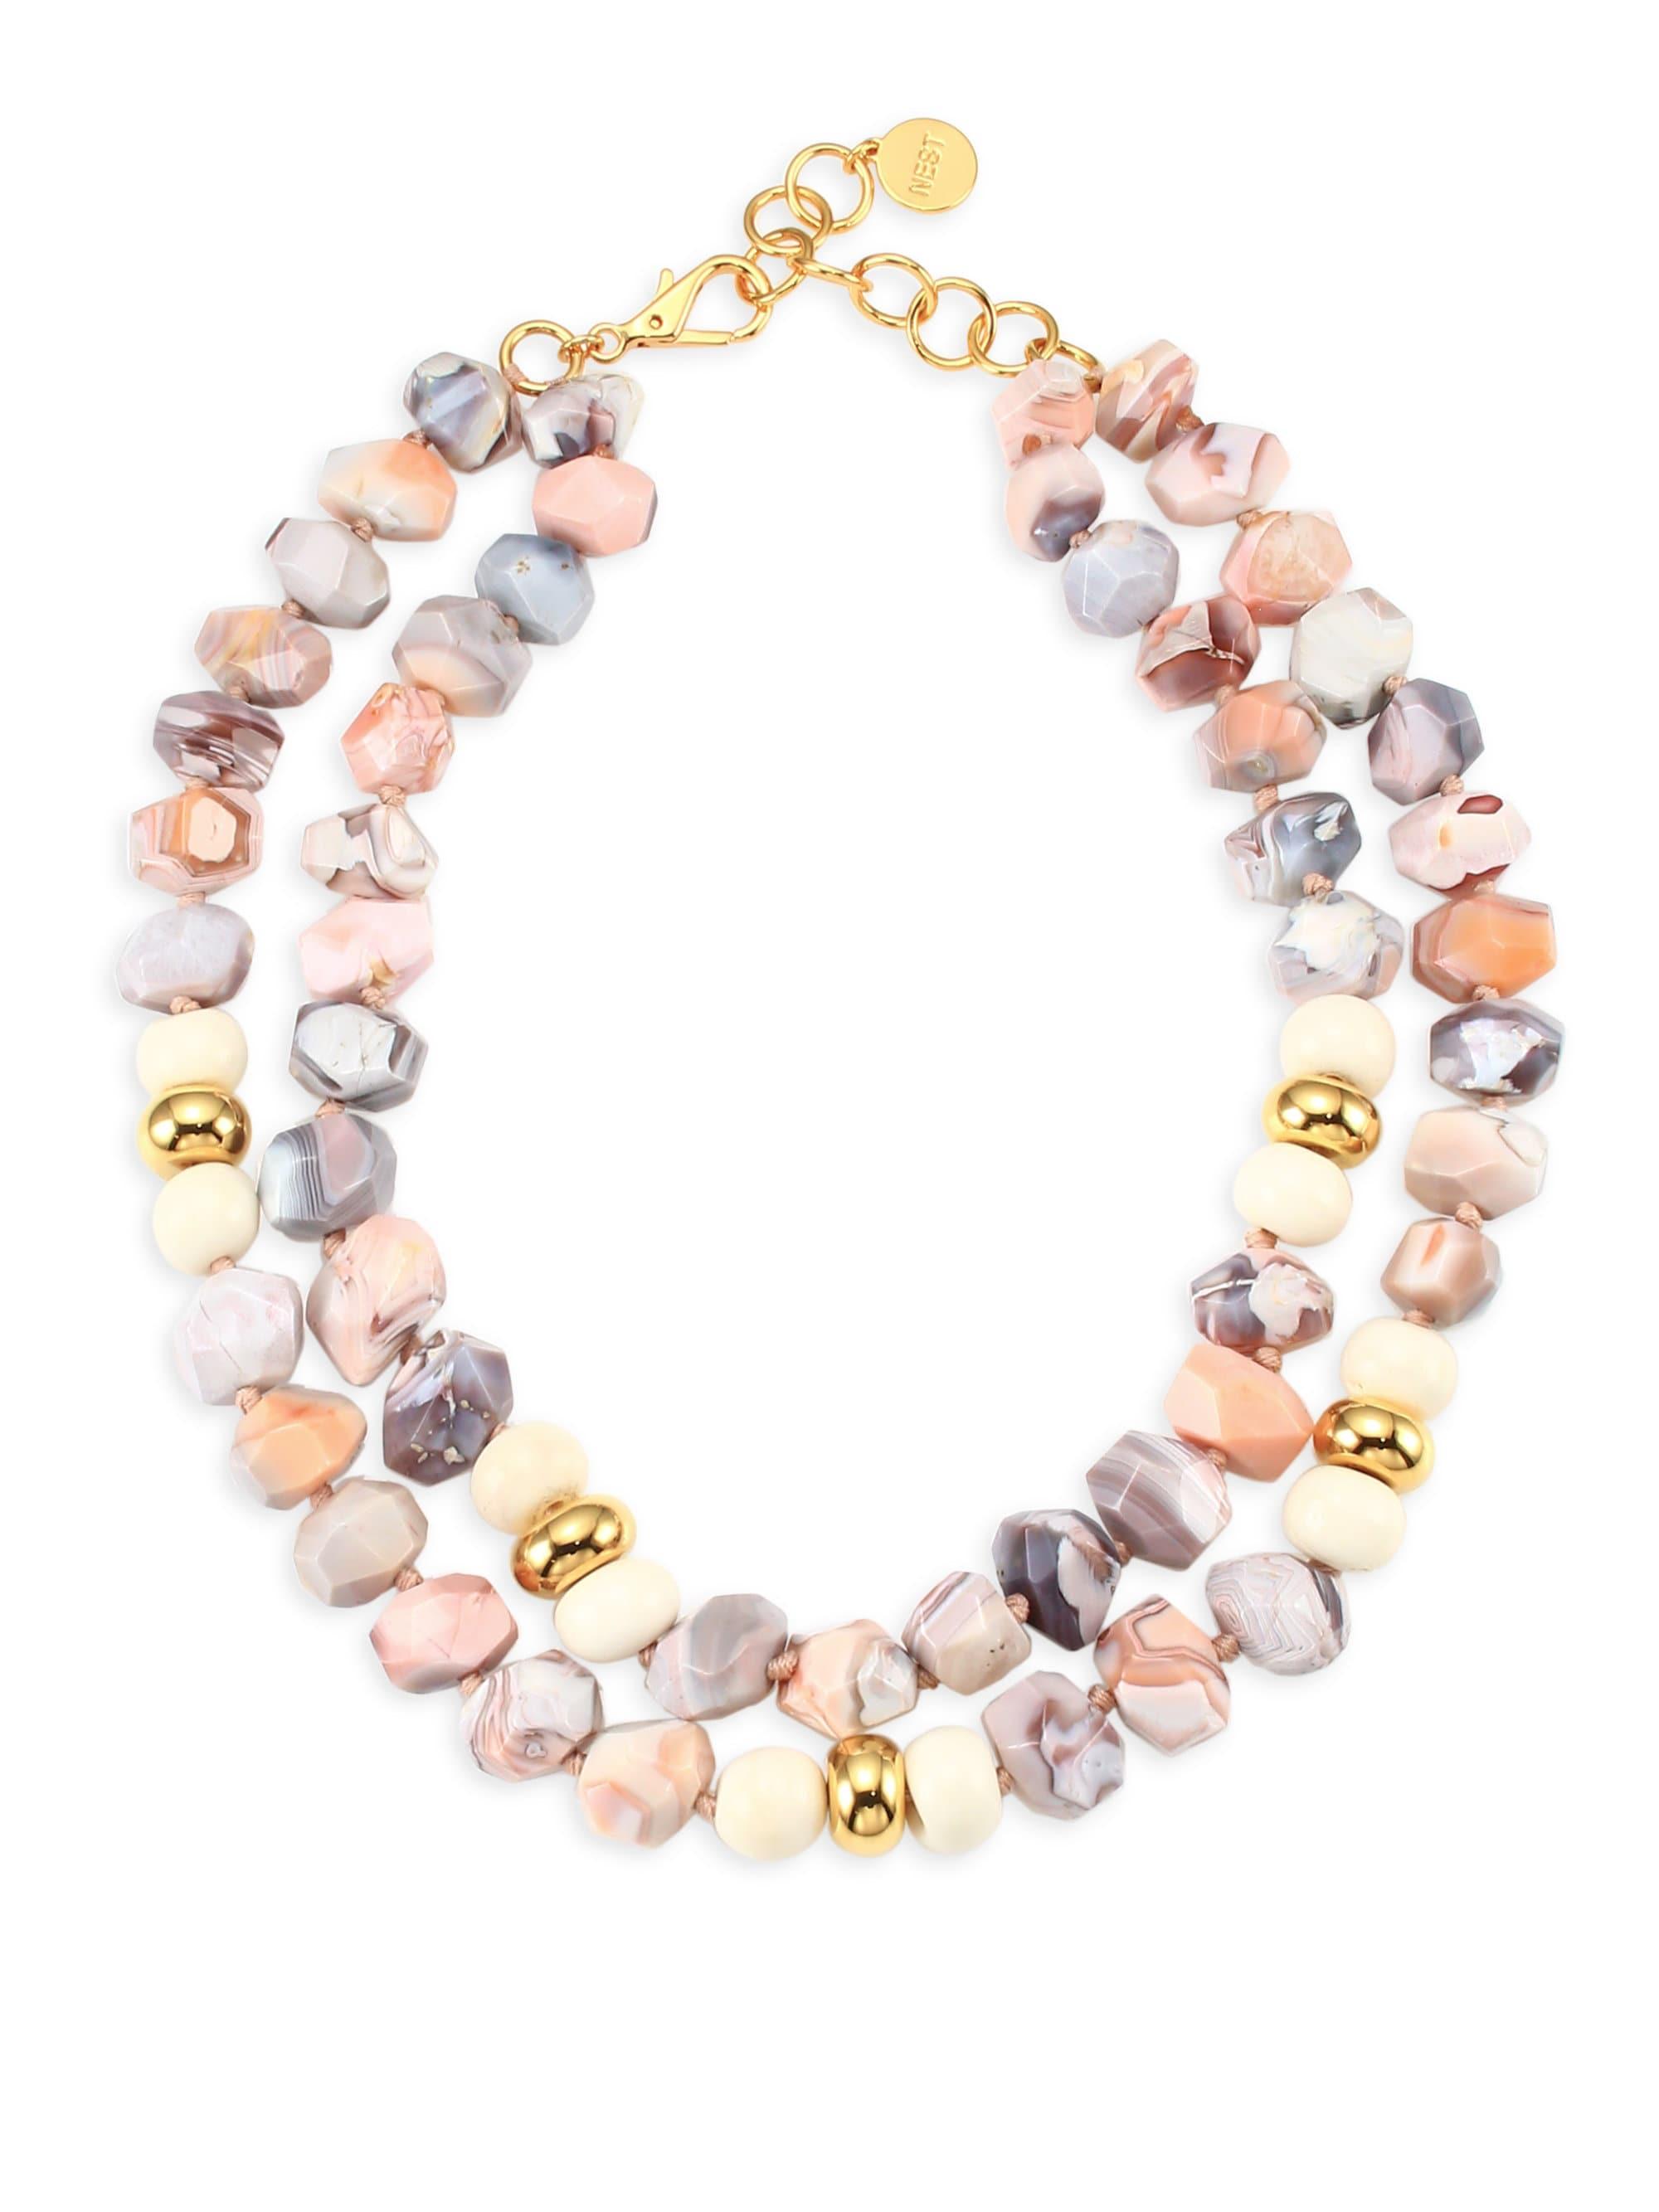 Botswana agate necklace gemstone necklace statement necklace charming necklace